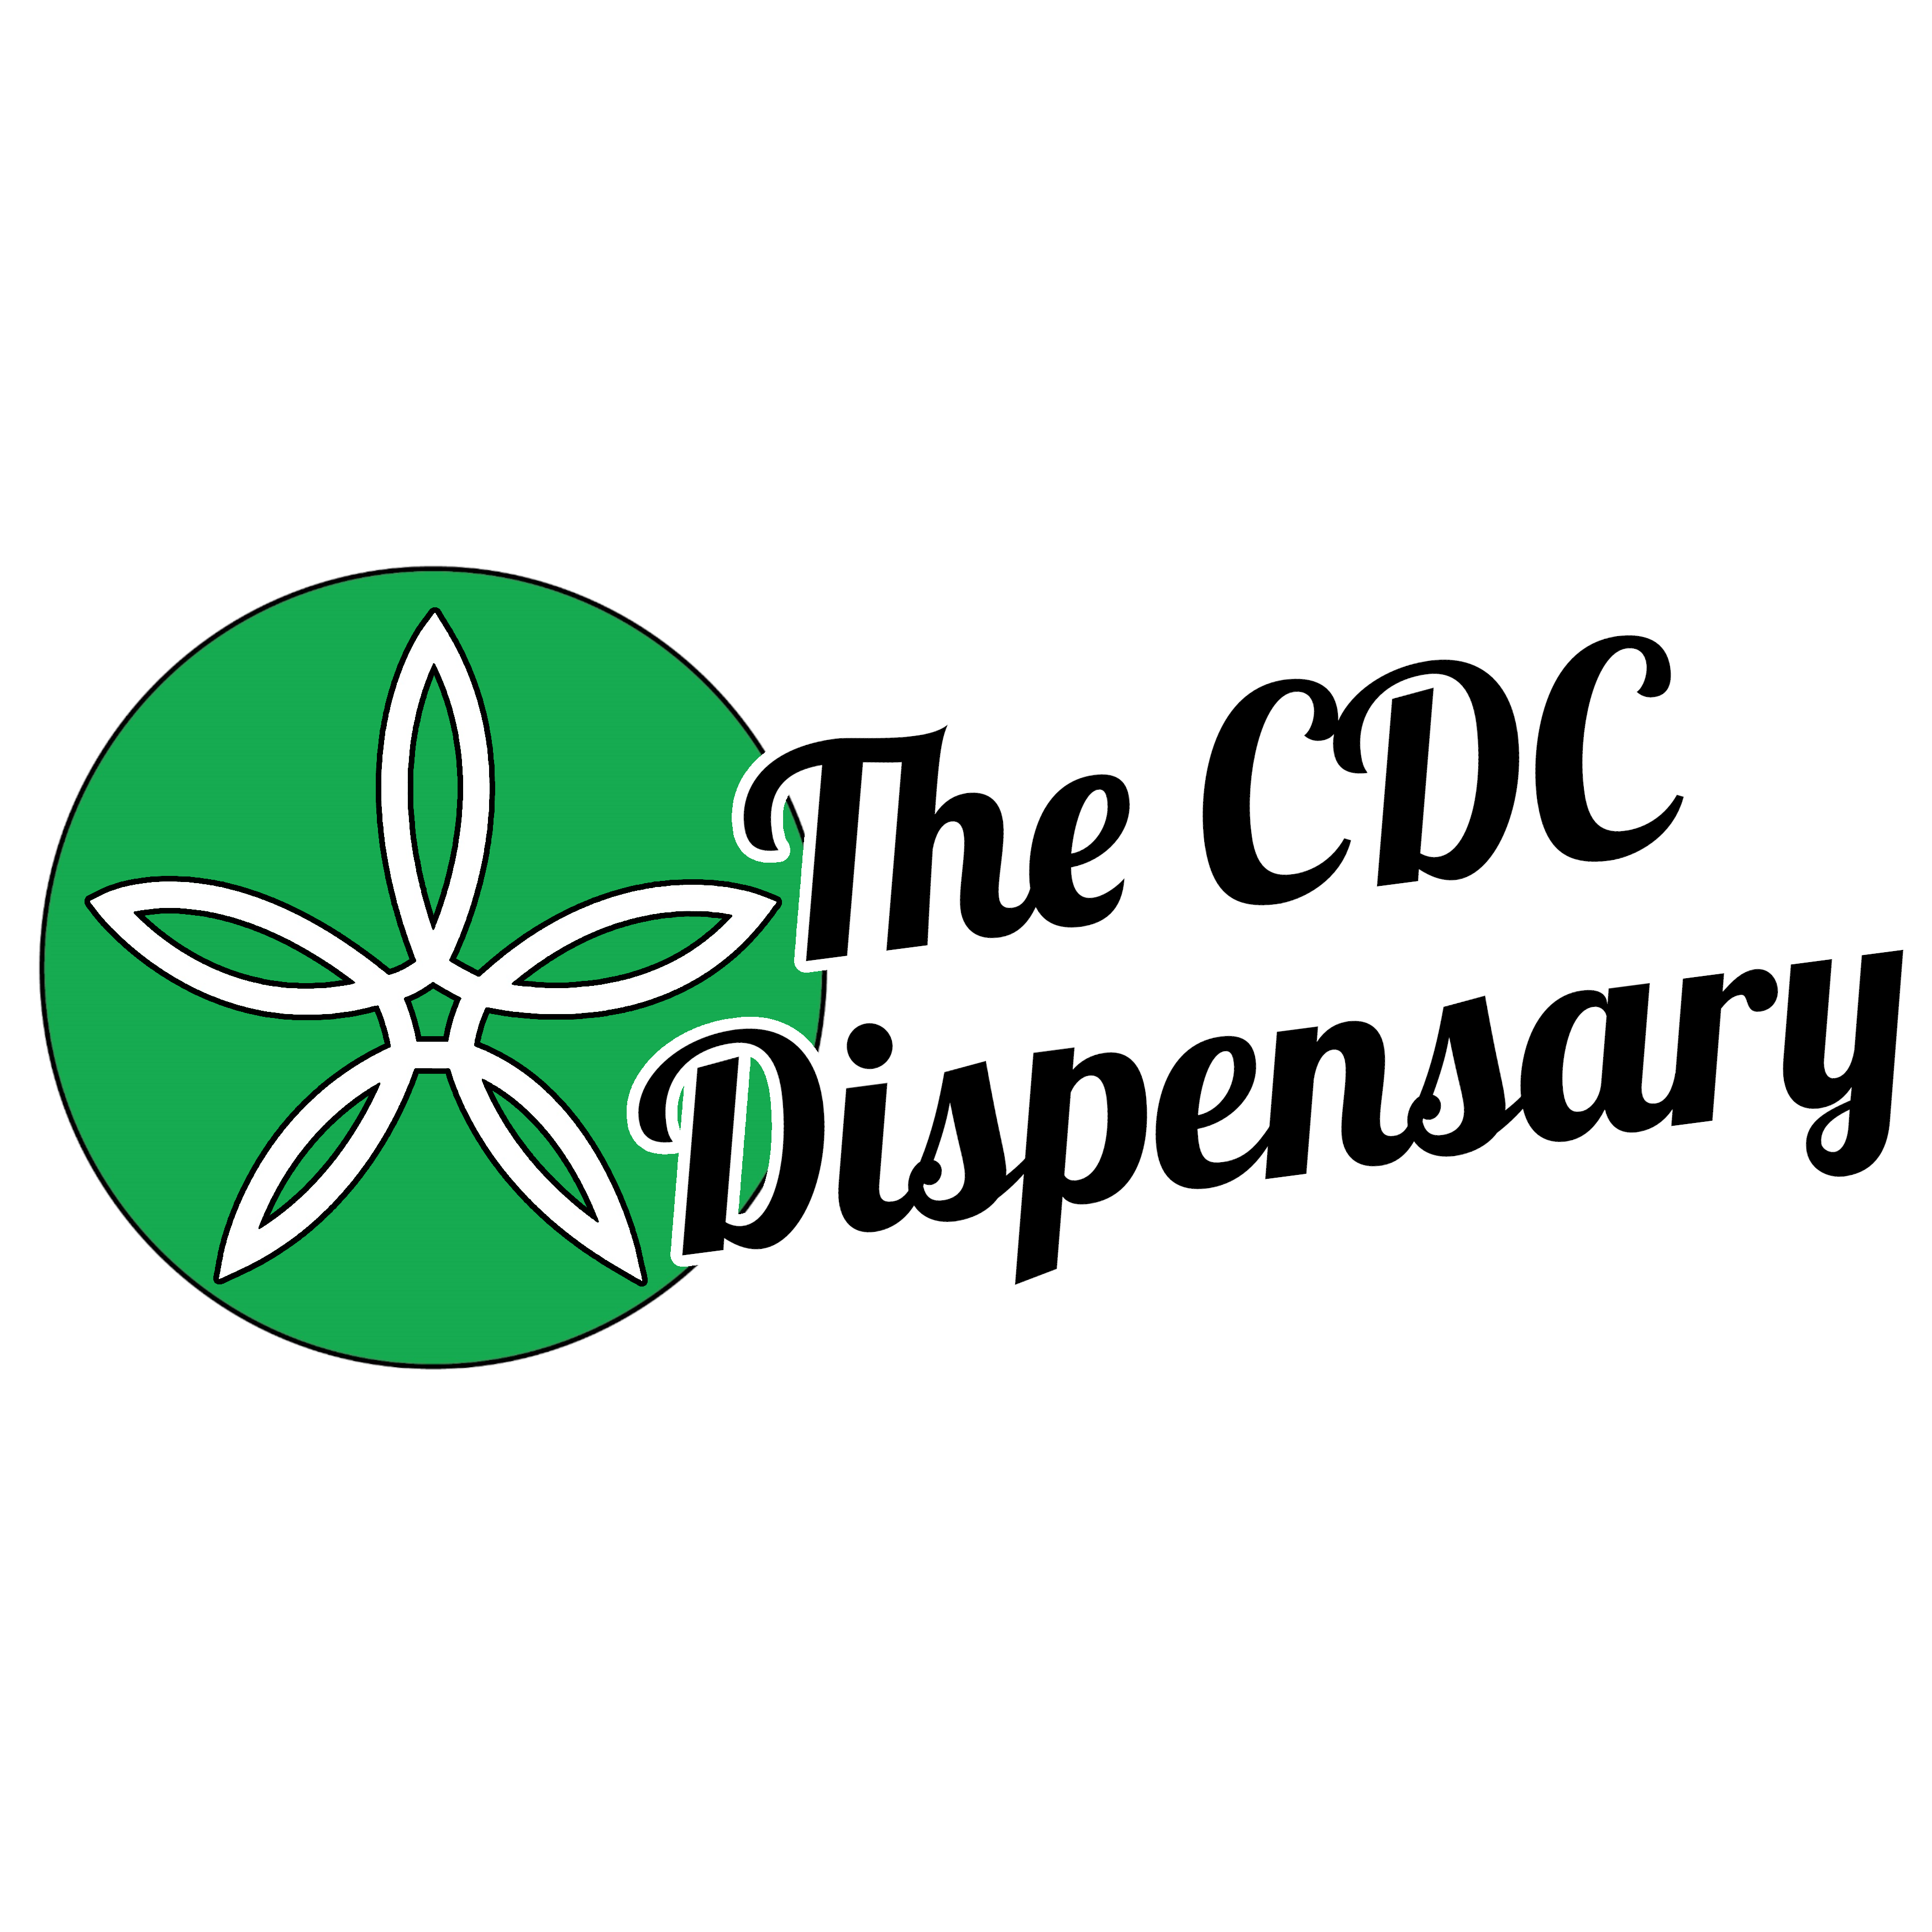 TCDC, LLC dba The CDC Dispensary